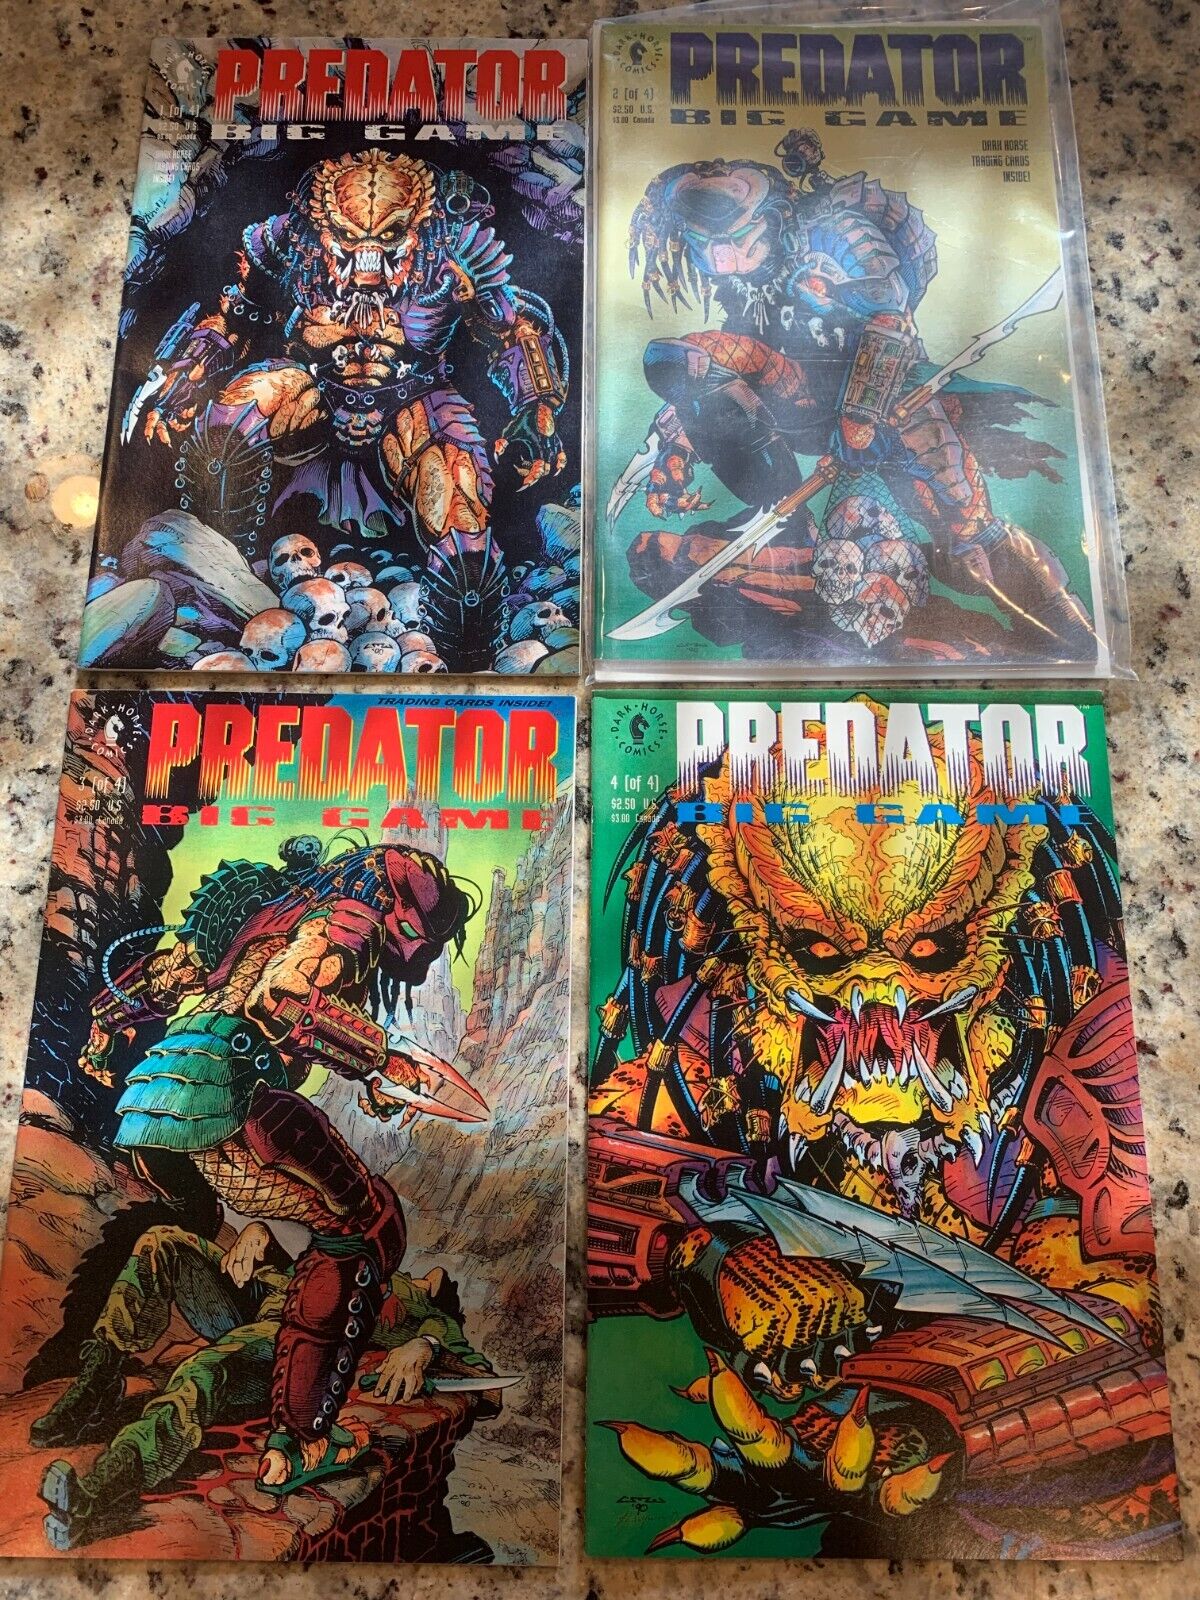 Predator Big Game #1-4 (1 2 3 4) Complete Series Set 1991 Dark Horse Comics Lot